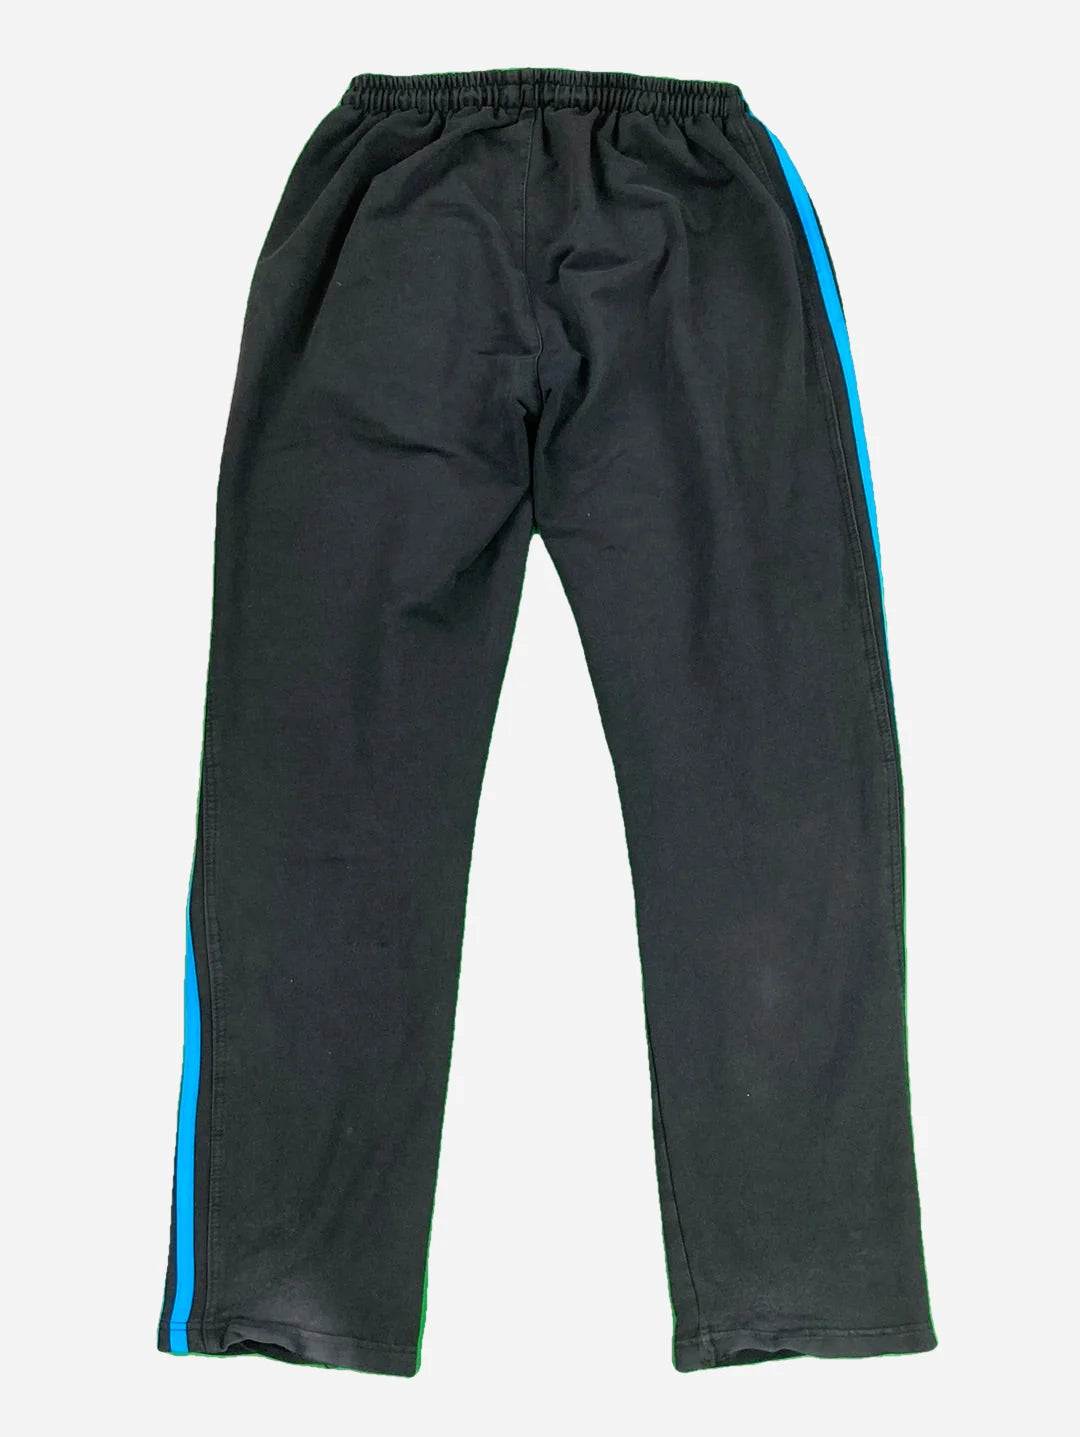 Adidas Track Pants (M